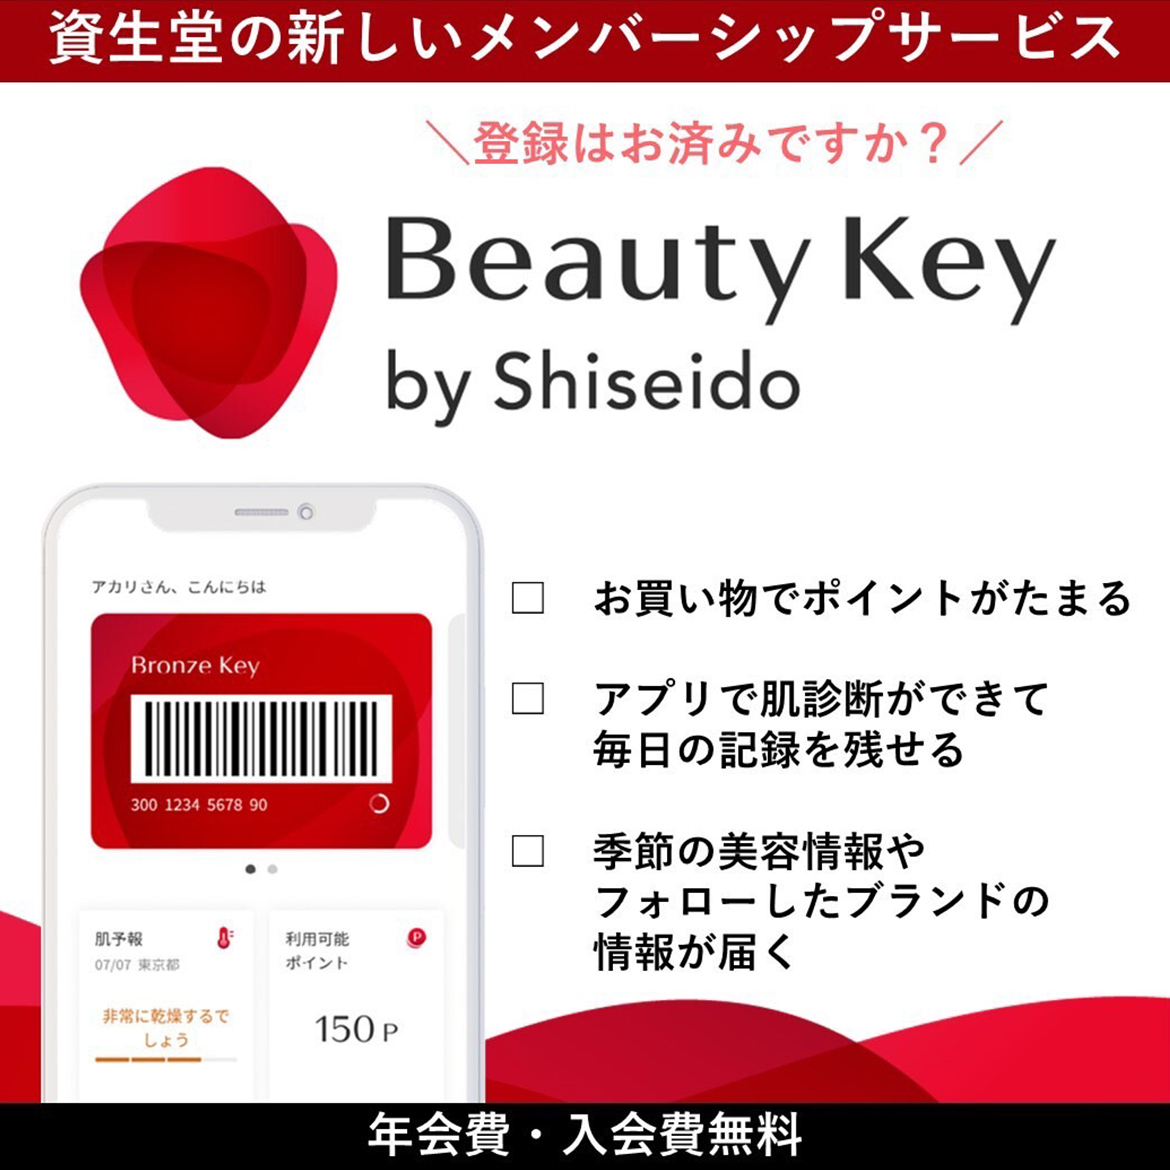 Beauty key